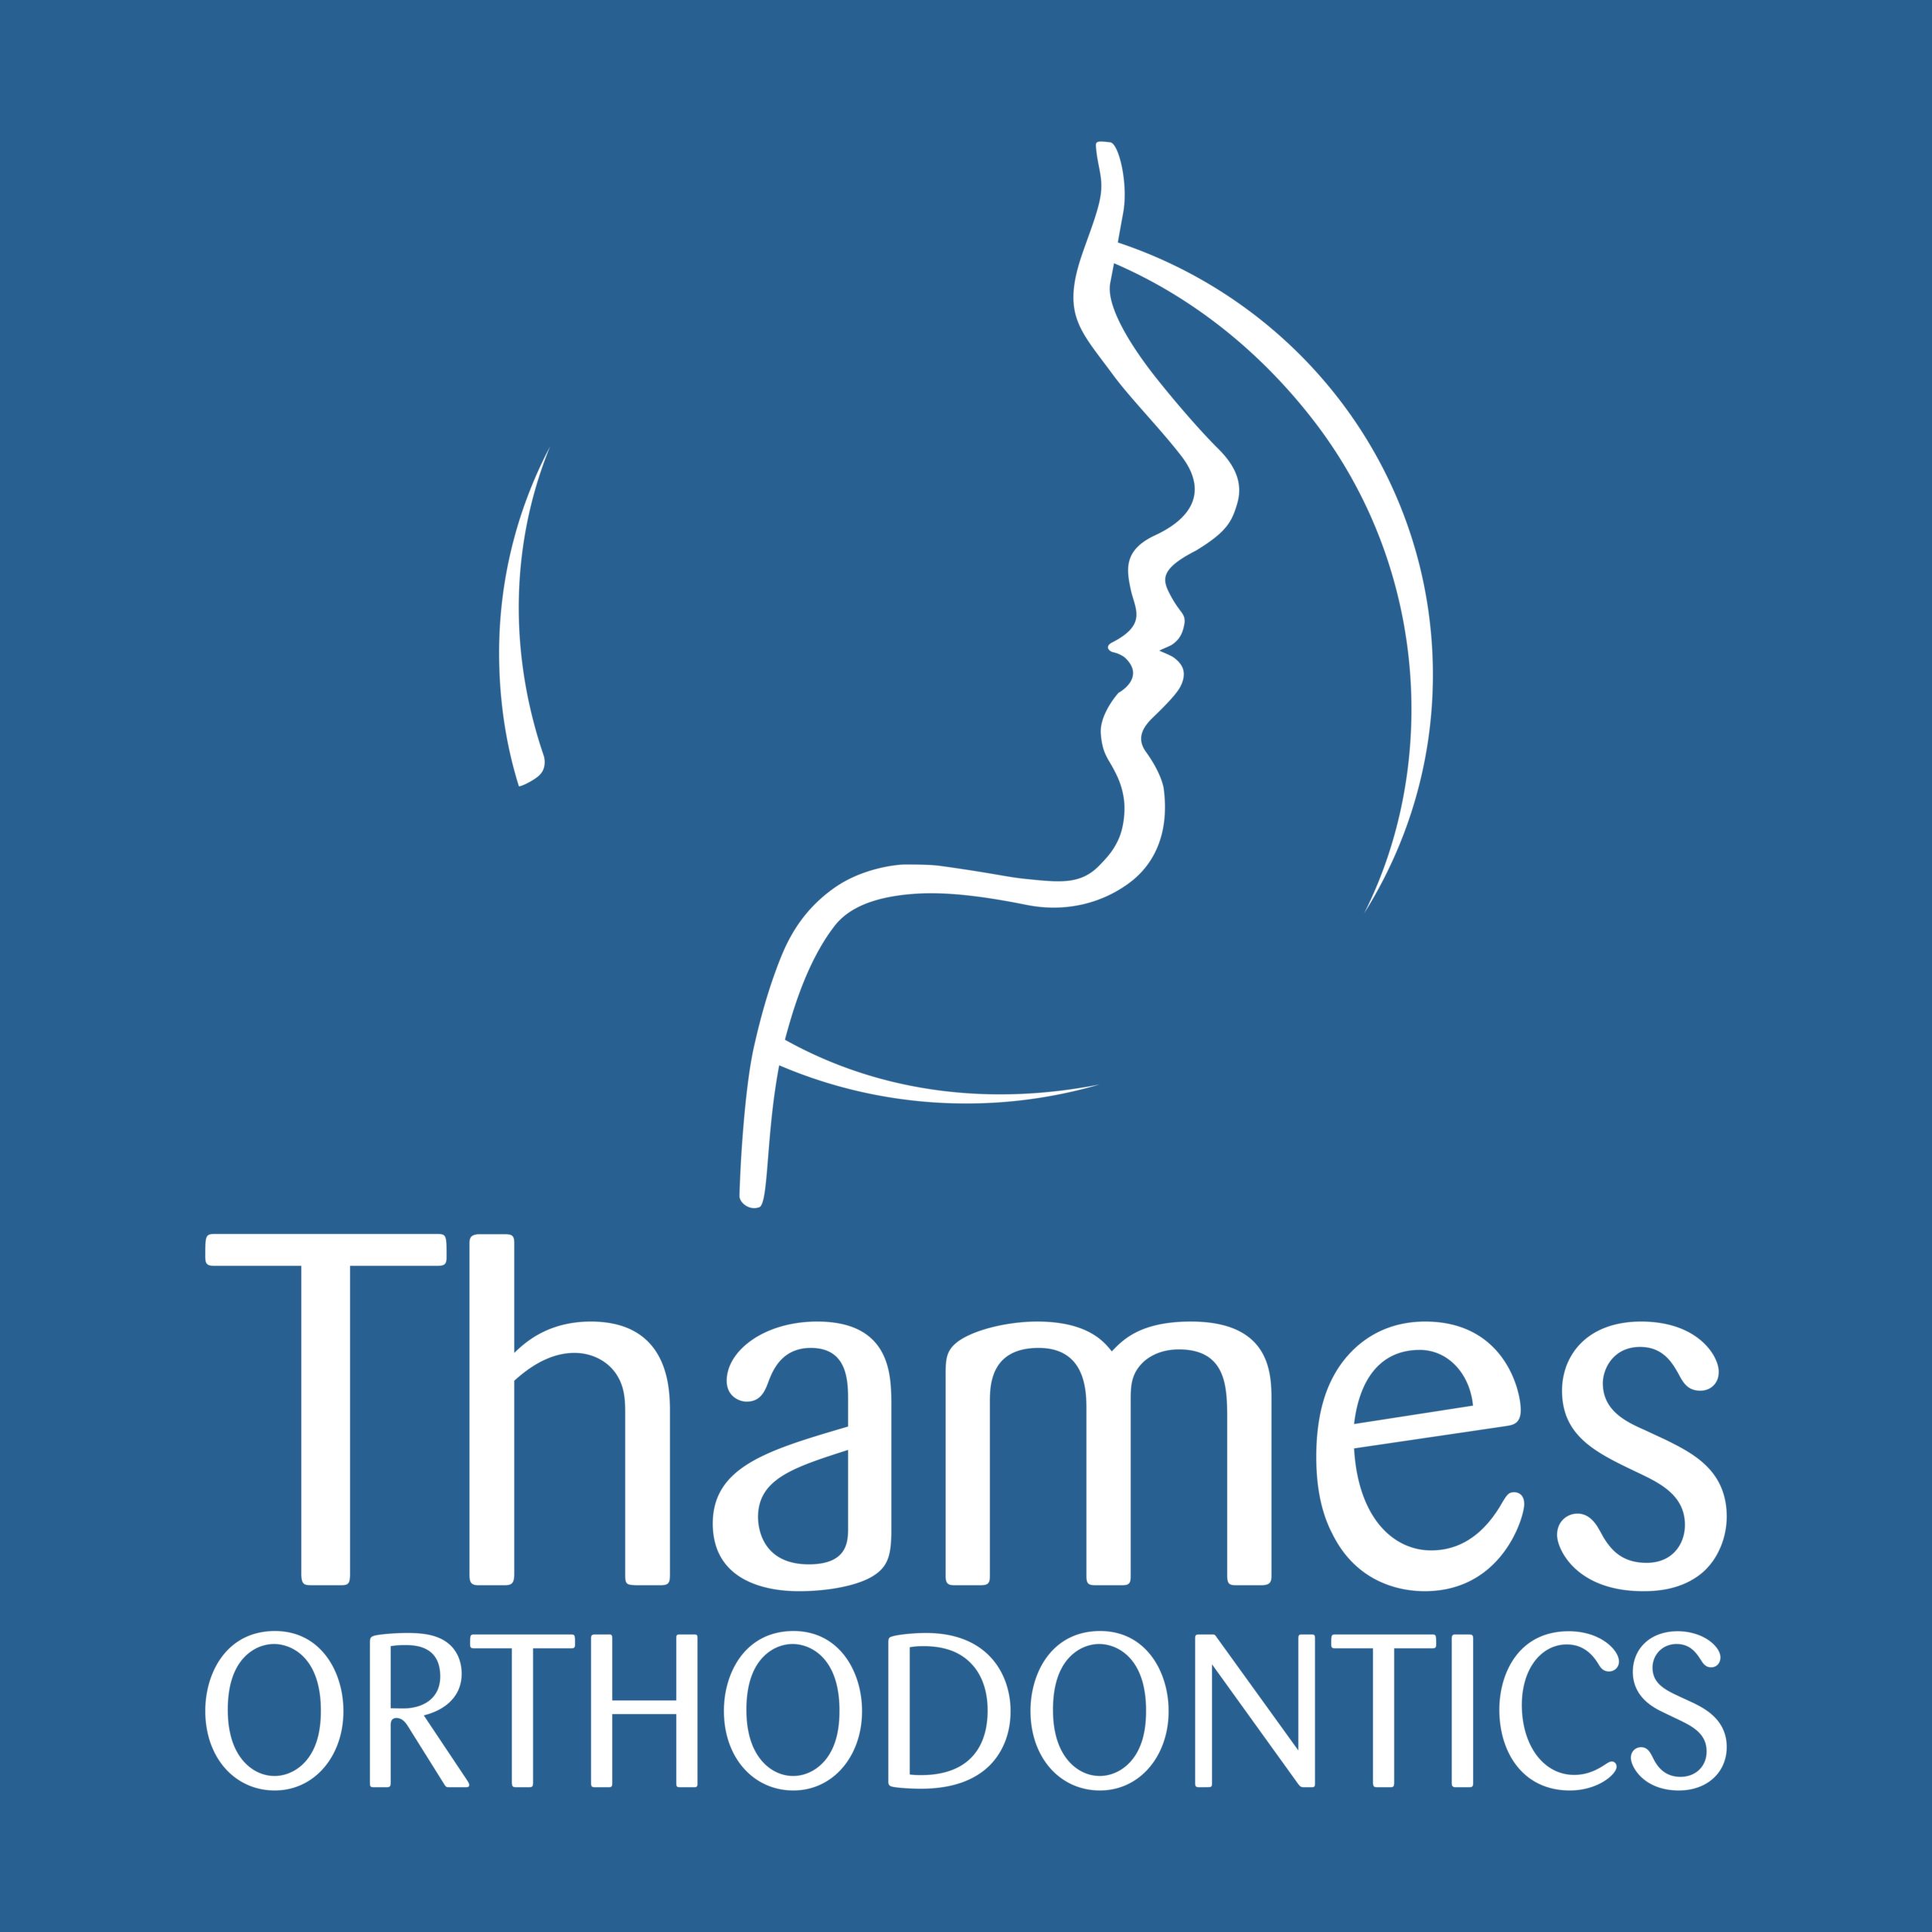 Thames Orthodontics Square 4x4 Basketball Signage.jpg